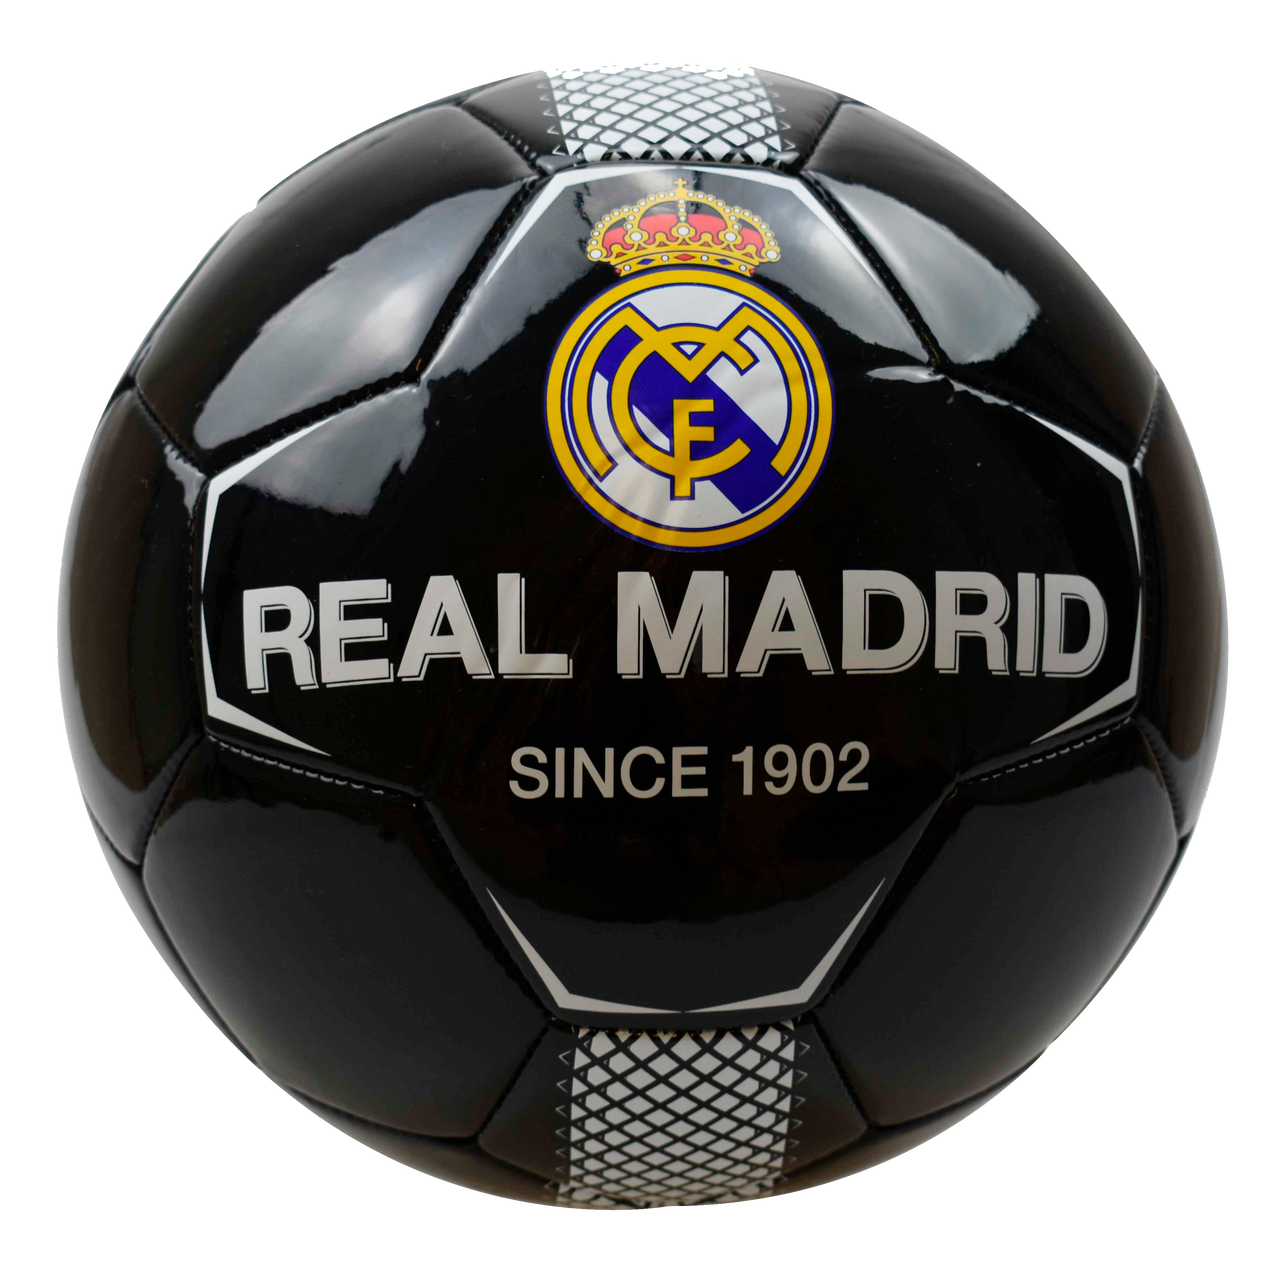 Balls from football - Real Madrid CF 